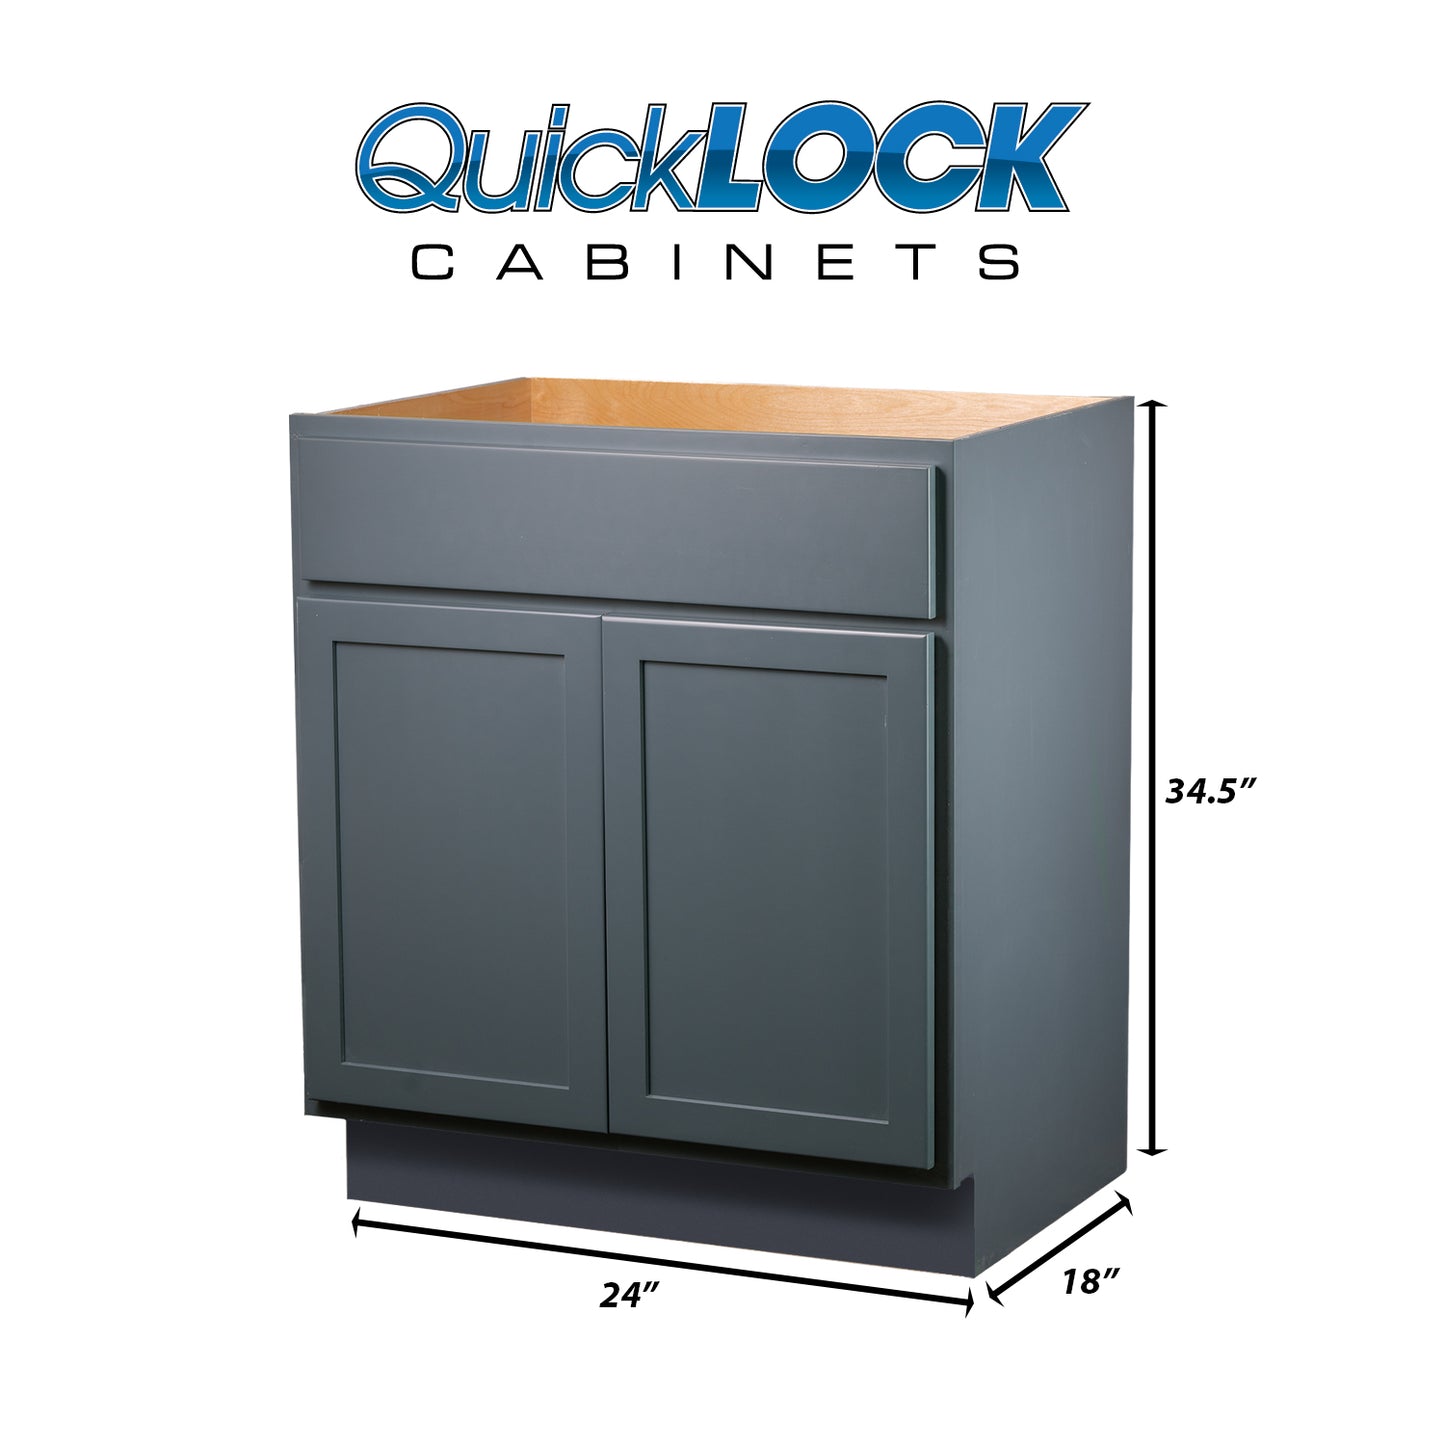 Quicklock RTA (Ready-to-Assemble) Needlepoint Navy Vanity Base Cabinet | 24"Wx34.5"Hx18"D